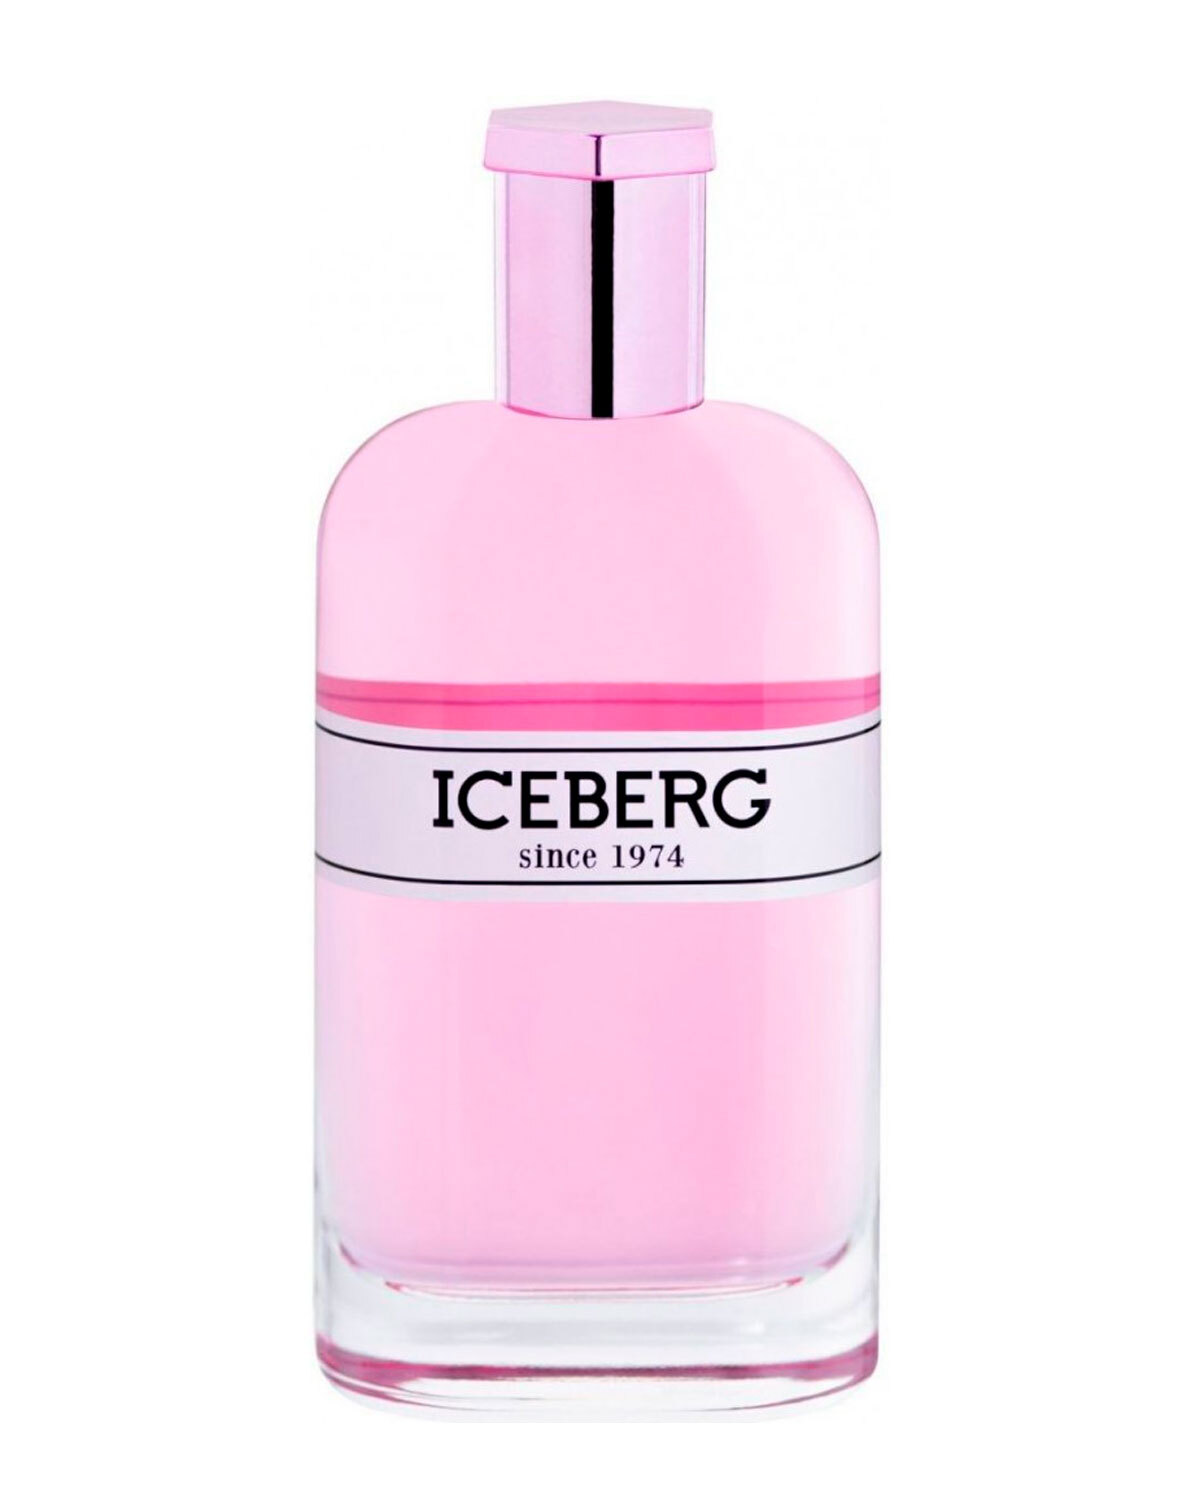 Iceberg туалетная вода. Iceberg since 1974 for her Lady 100ml EDP. Iceberg 74 туалетная вода женская. Iceberg since 1974. Парфюм Айсберг 1974.